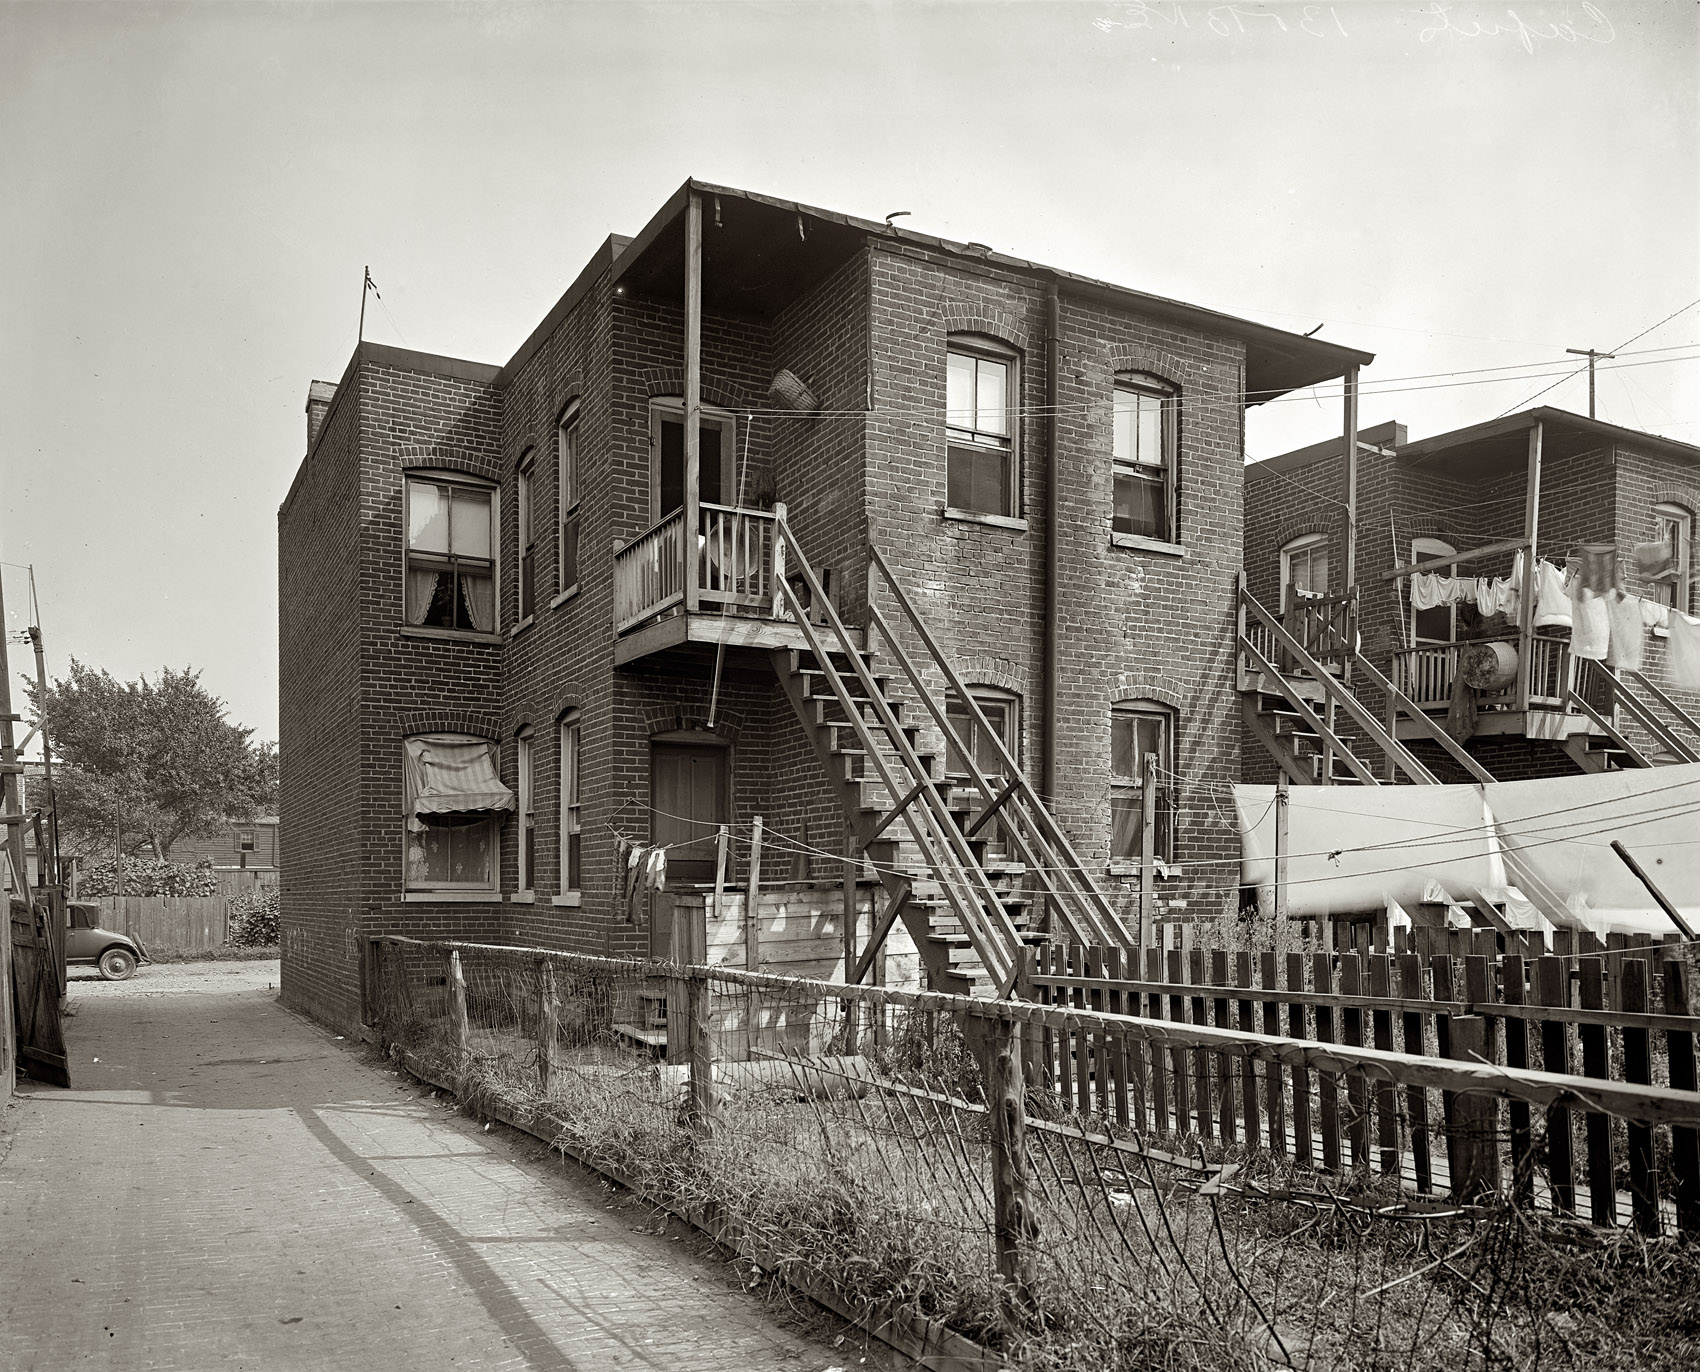 Washington, D.C., circa 1922. "Cafritz, 13th & B Streets N.E." Probably taken for Morris Cafritz's real estate development company. View full size.